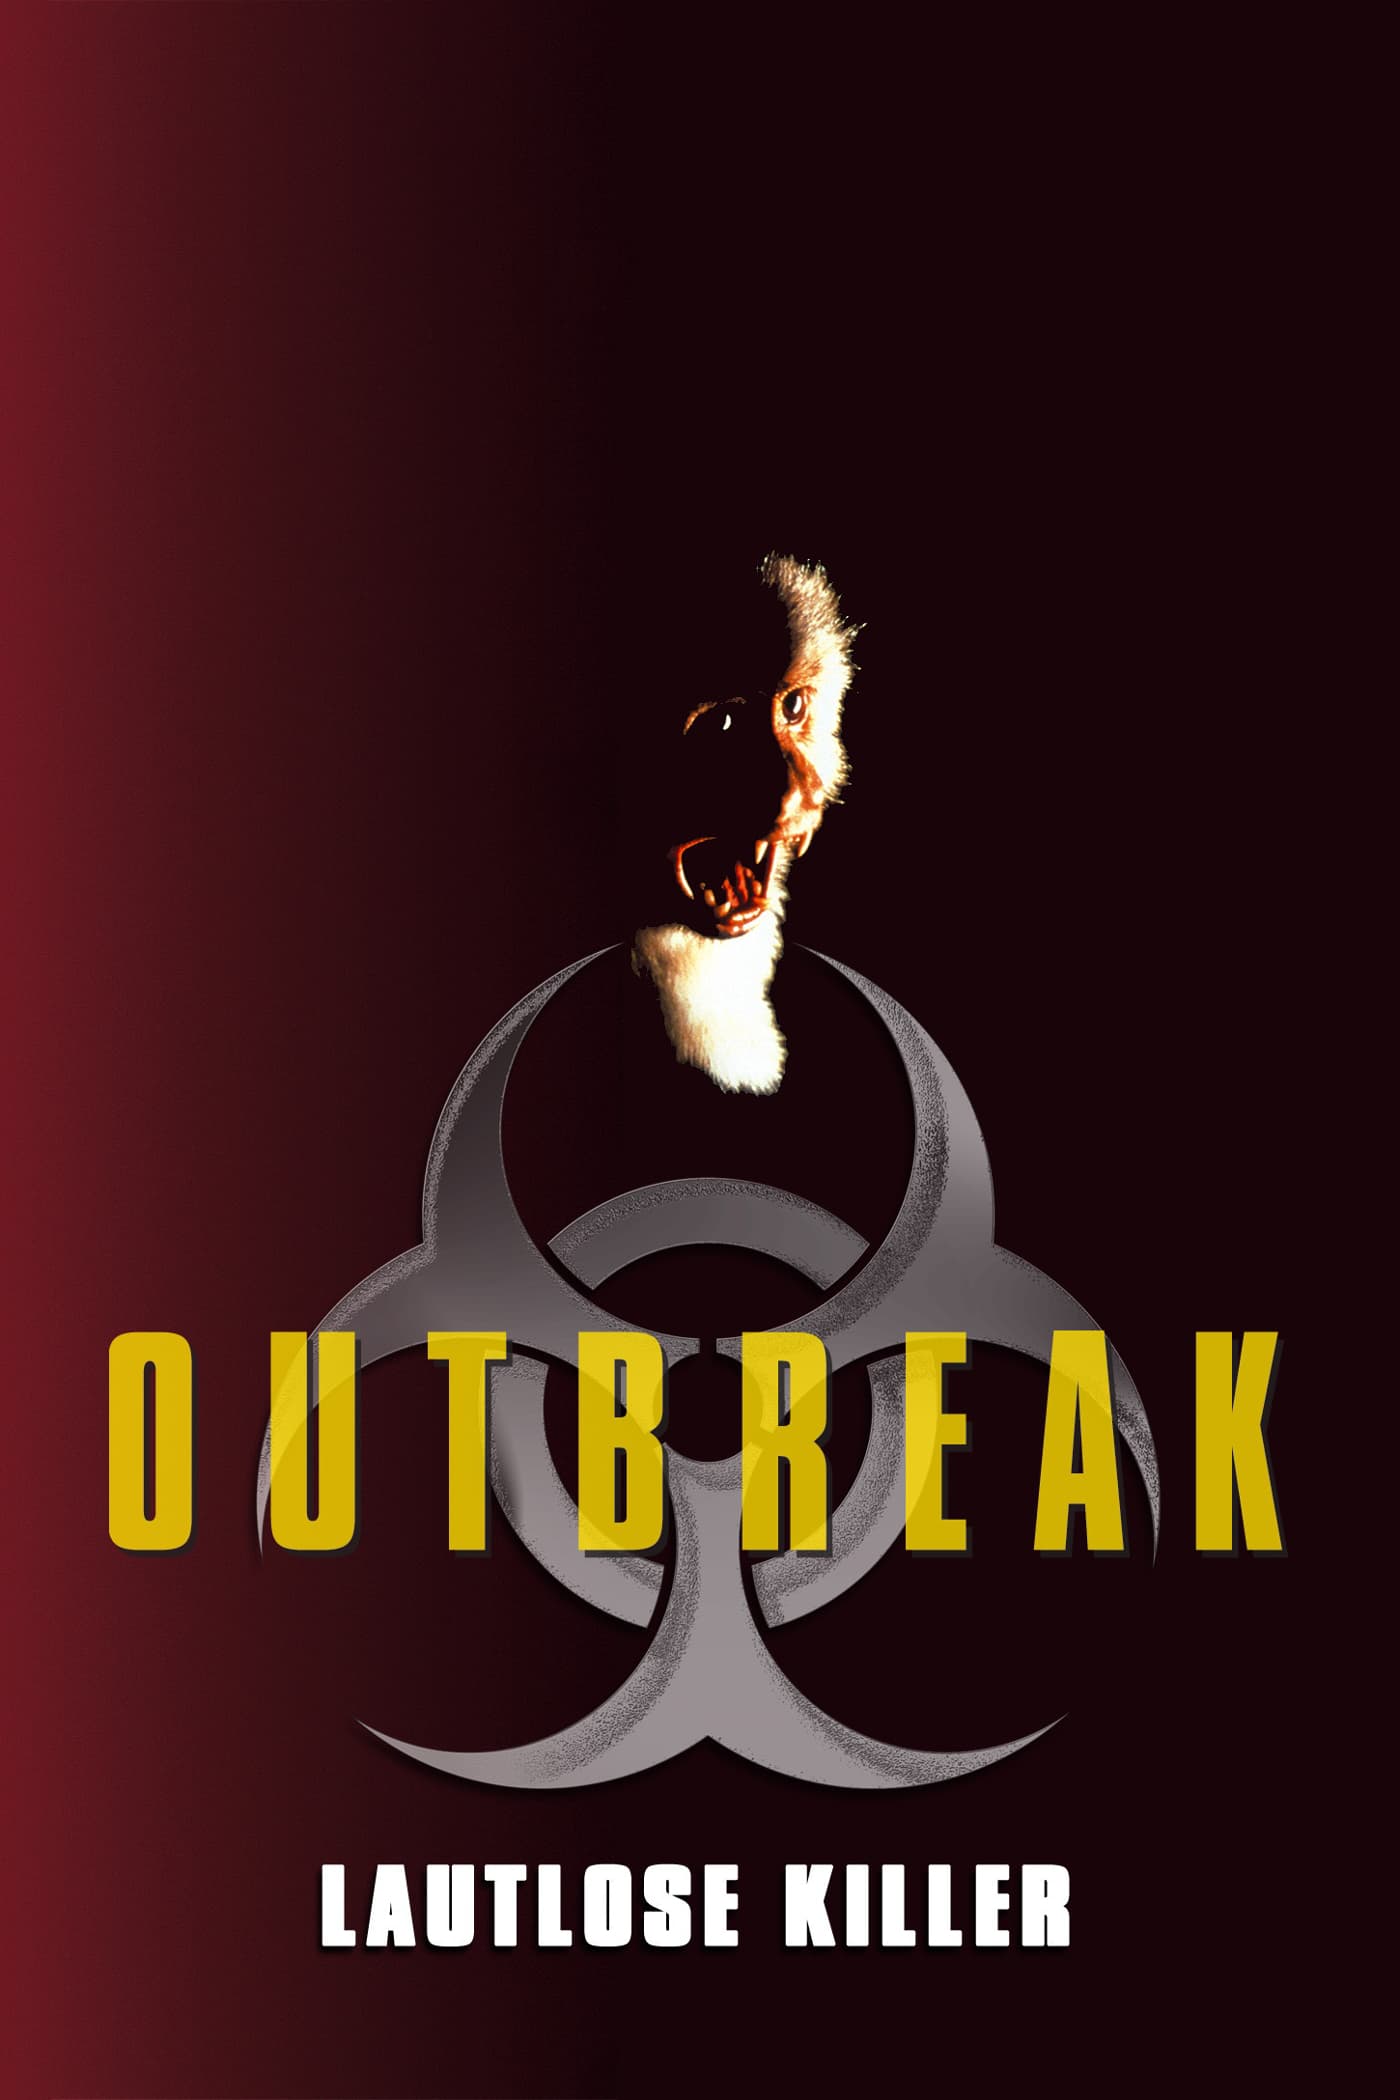 Plakat von "Outbreak - Lautlose Killer"